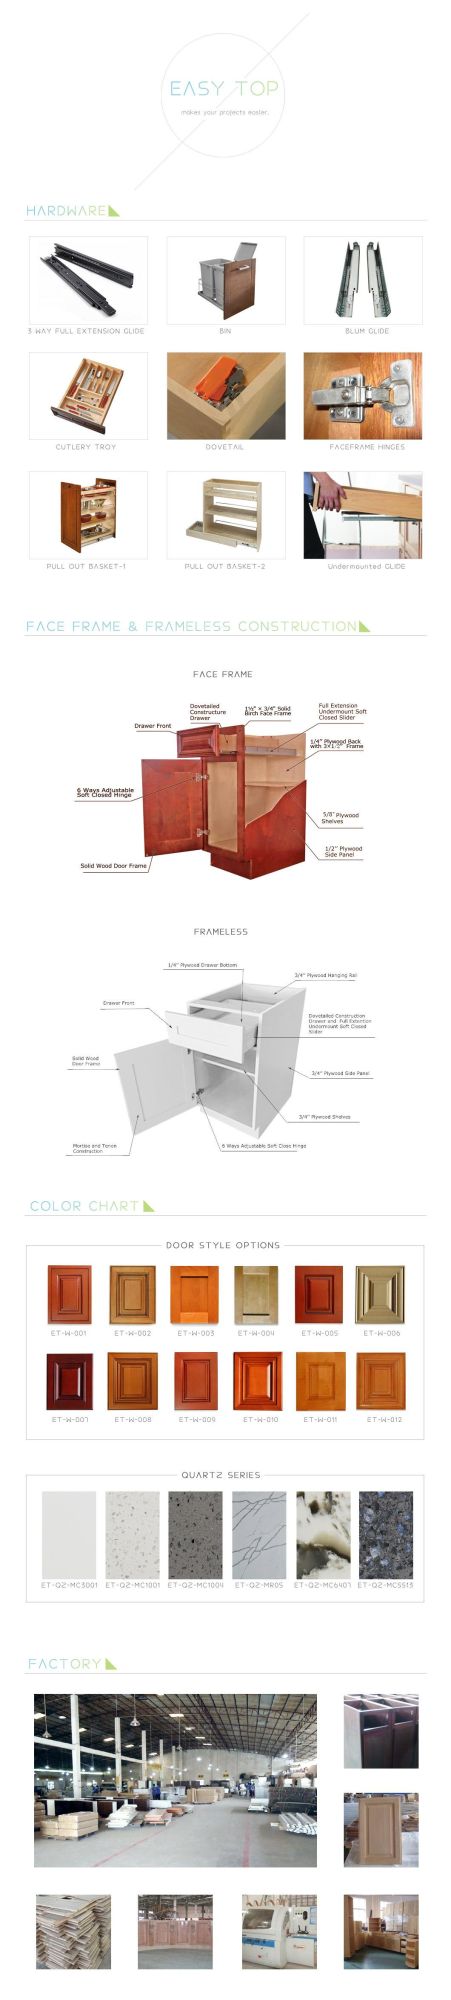 Personalized Customize Made Elegant Soild Famous Wooden Rta Kitchen Cabinet